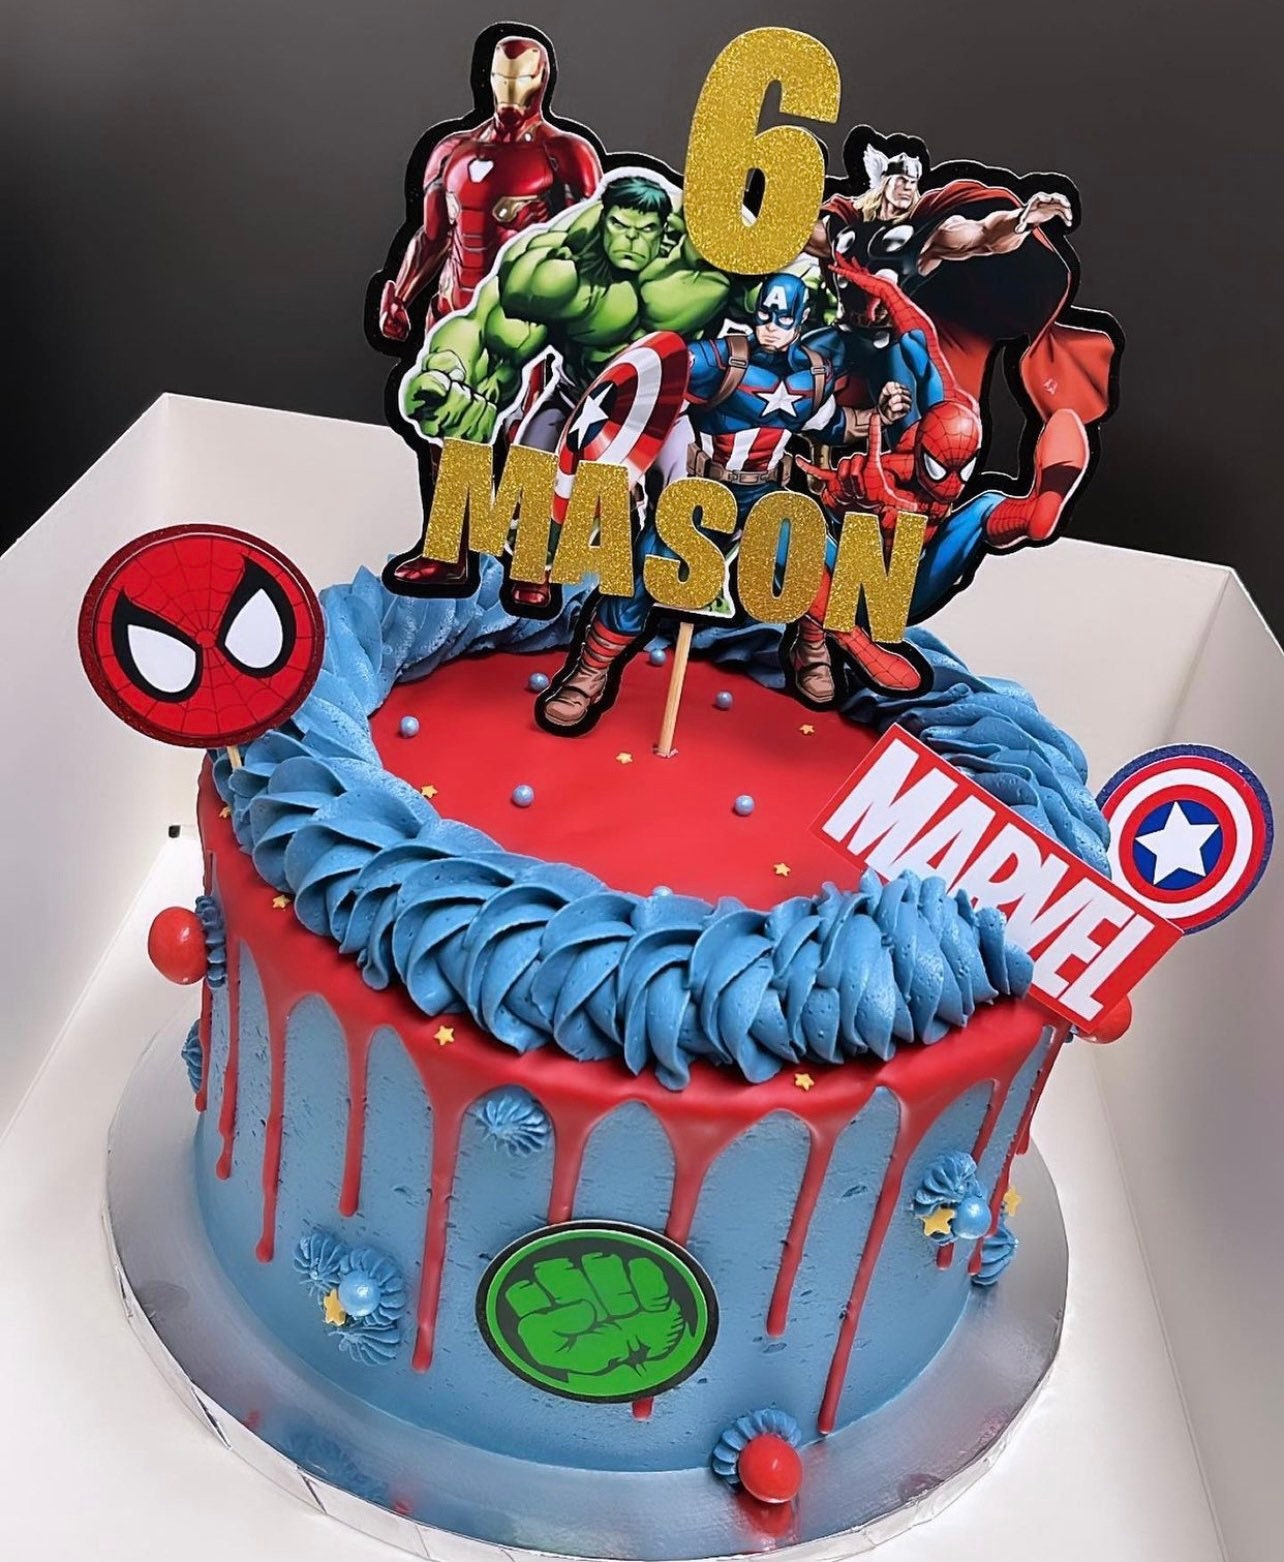 Simmpu Avengers Compleanno Decorazioni,4 Pezzi Supereroe Cake Topper per Torte di Compleann Festa Superhero Cake Topper Cartoni Animati Decorazioni 